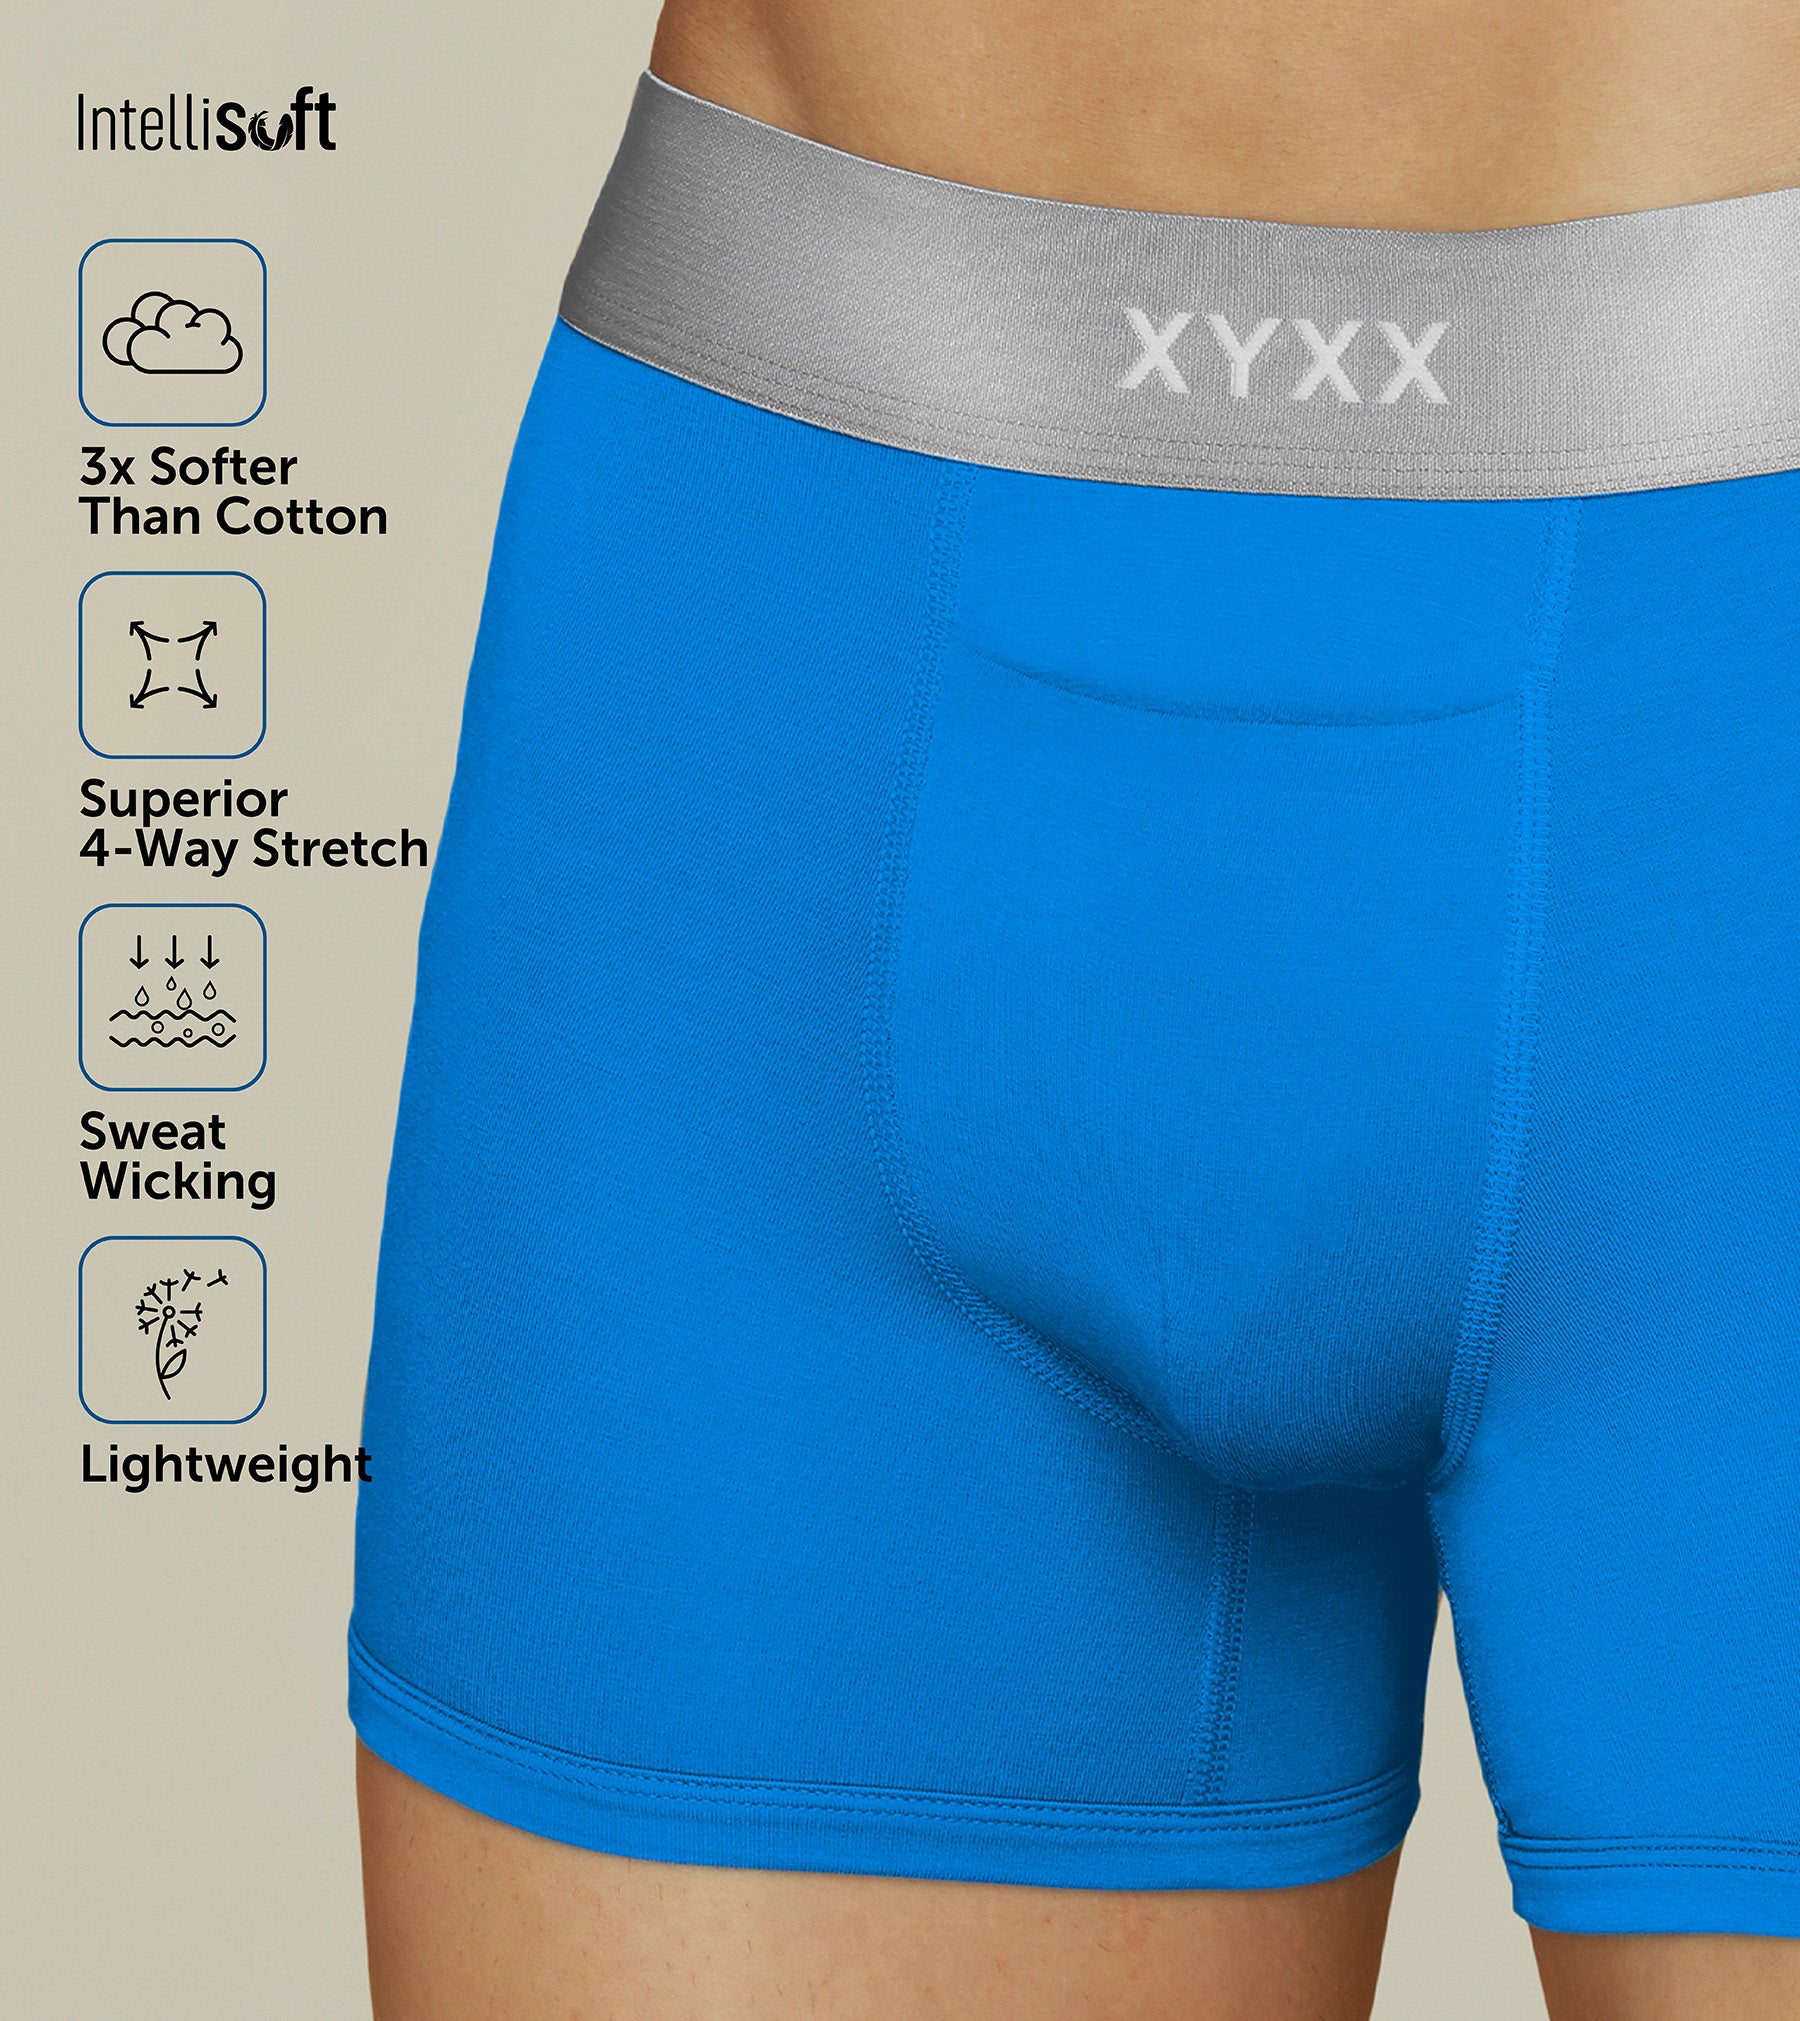 Illuminati Modal Trunks For Men Blue Royale -  XYXX Mens Apparels